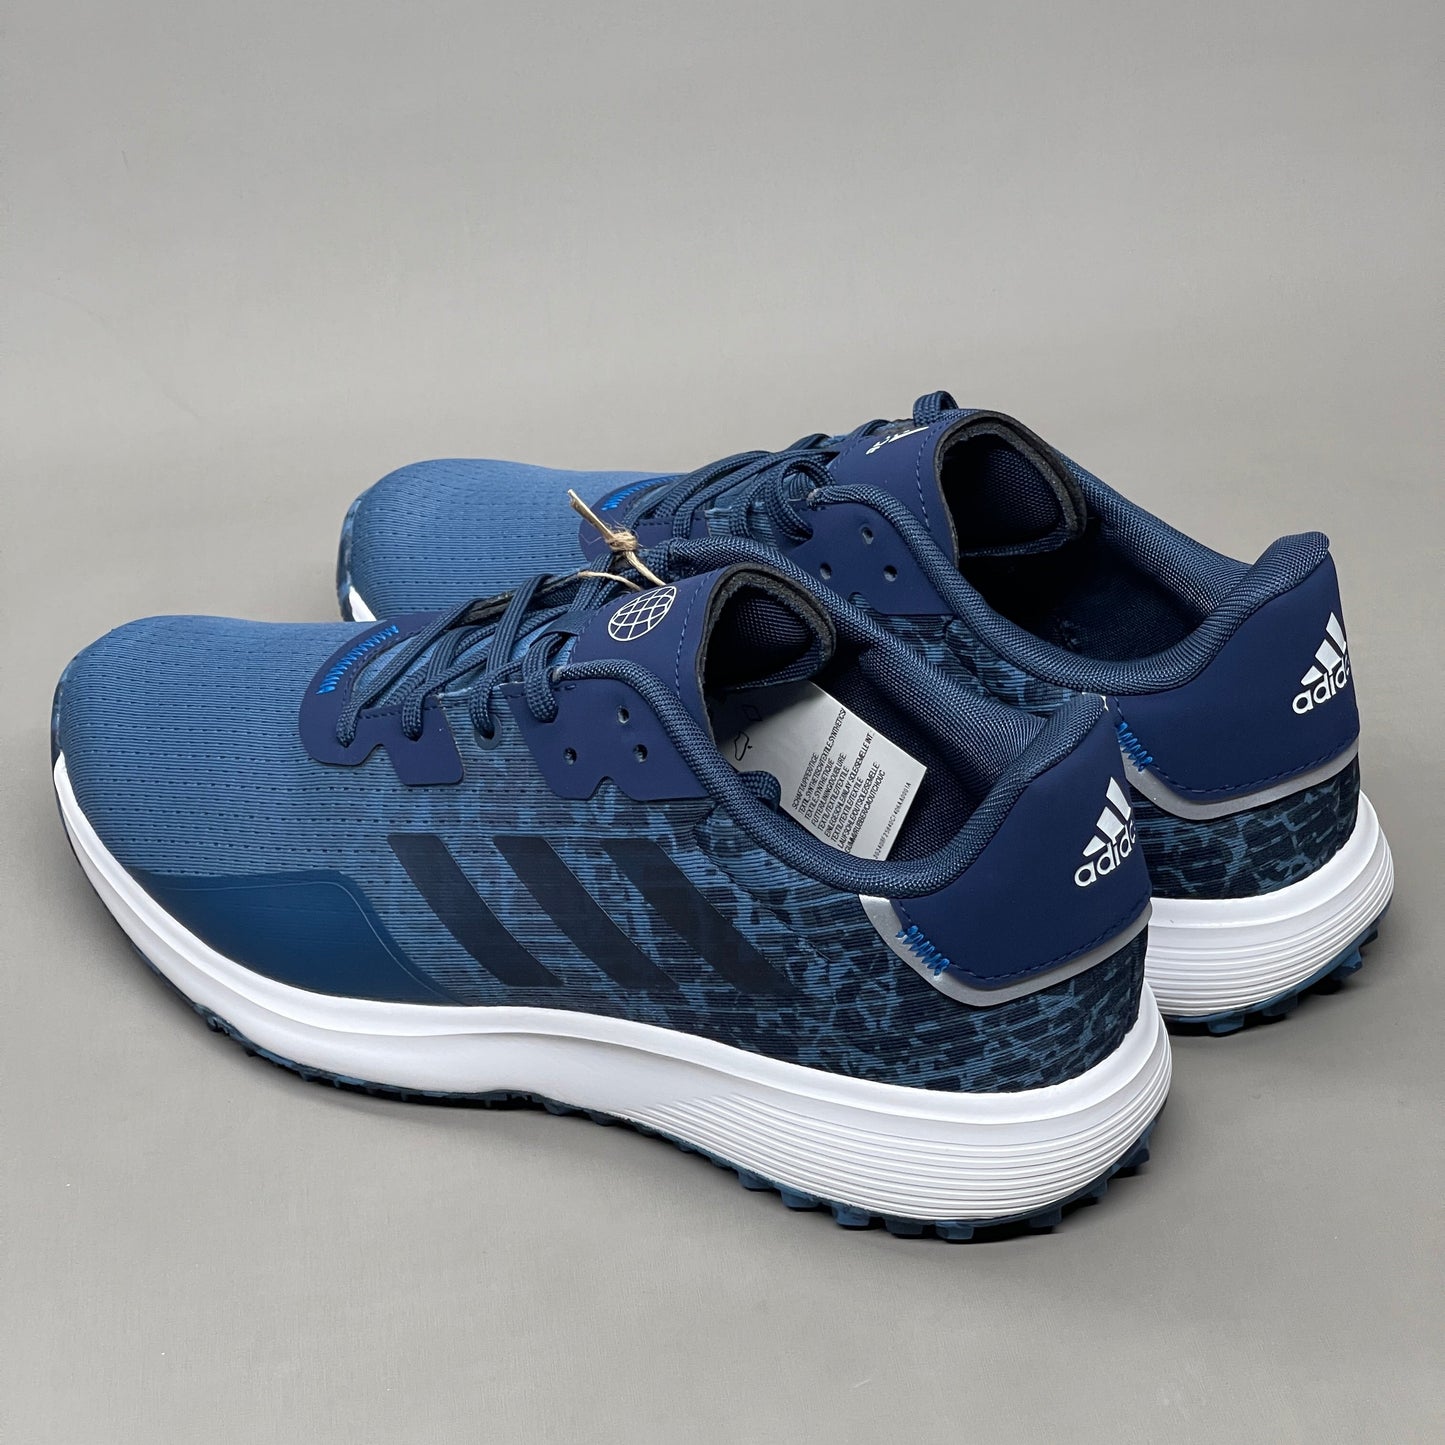 ADIDAS Golf Shoes S2G SL Waterproof Men's Sz 11.5 Blue / Navy / White GV9794 (New)